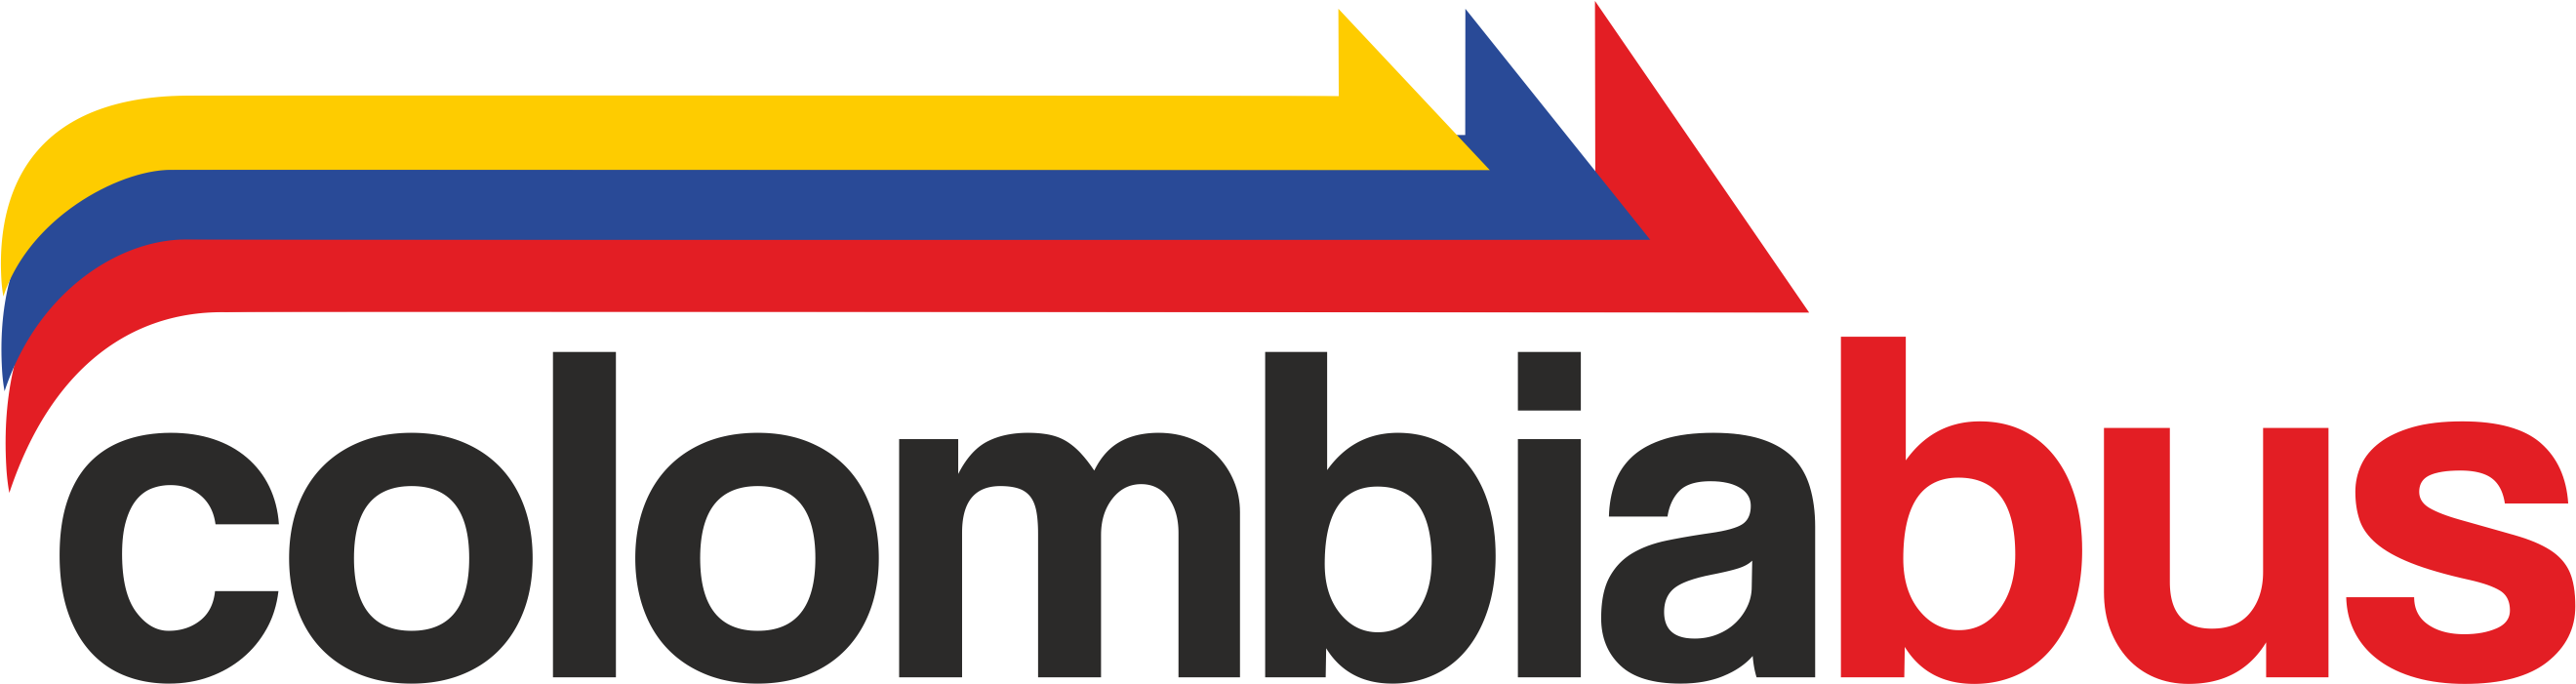 colombiabus